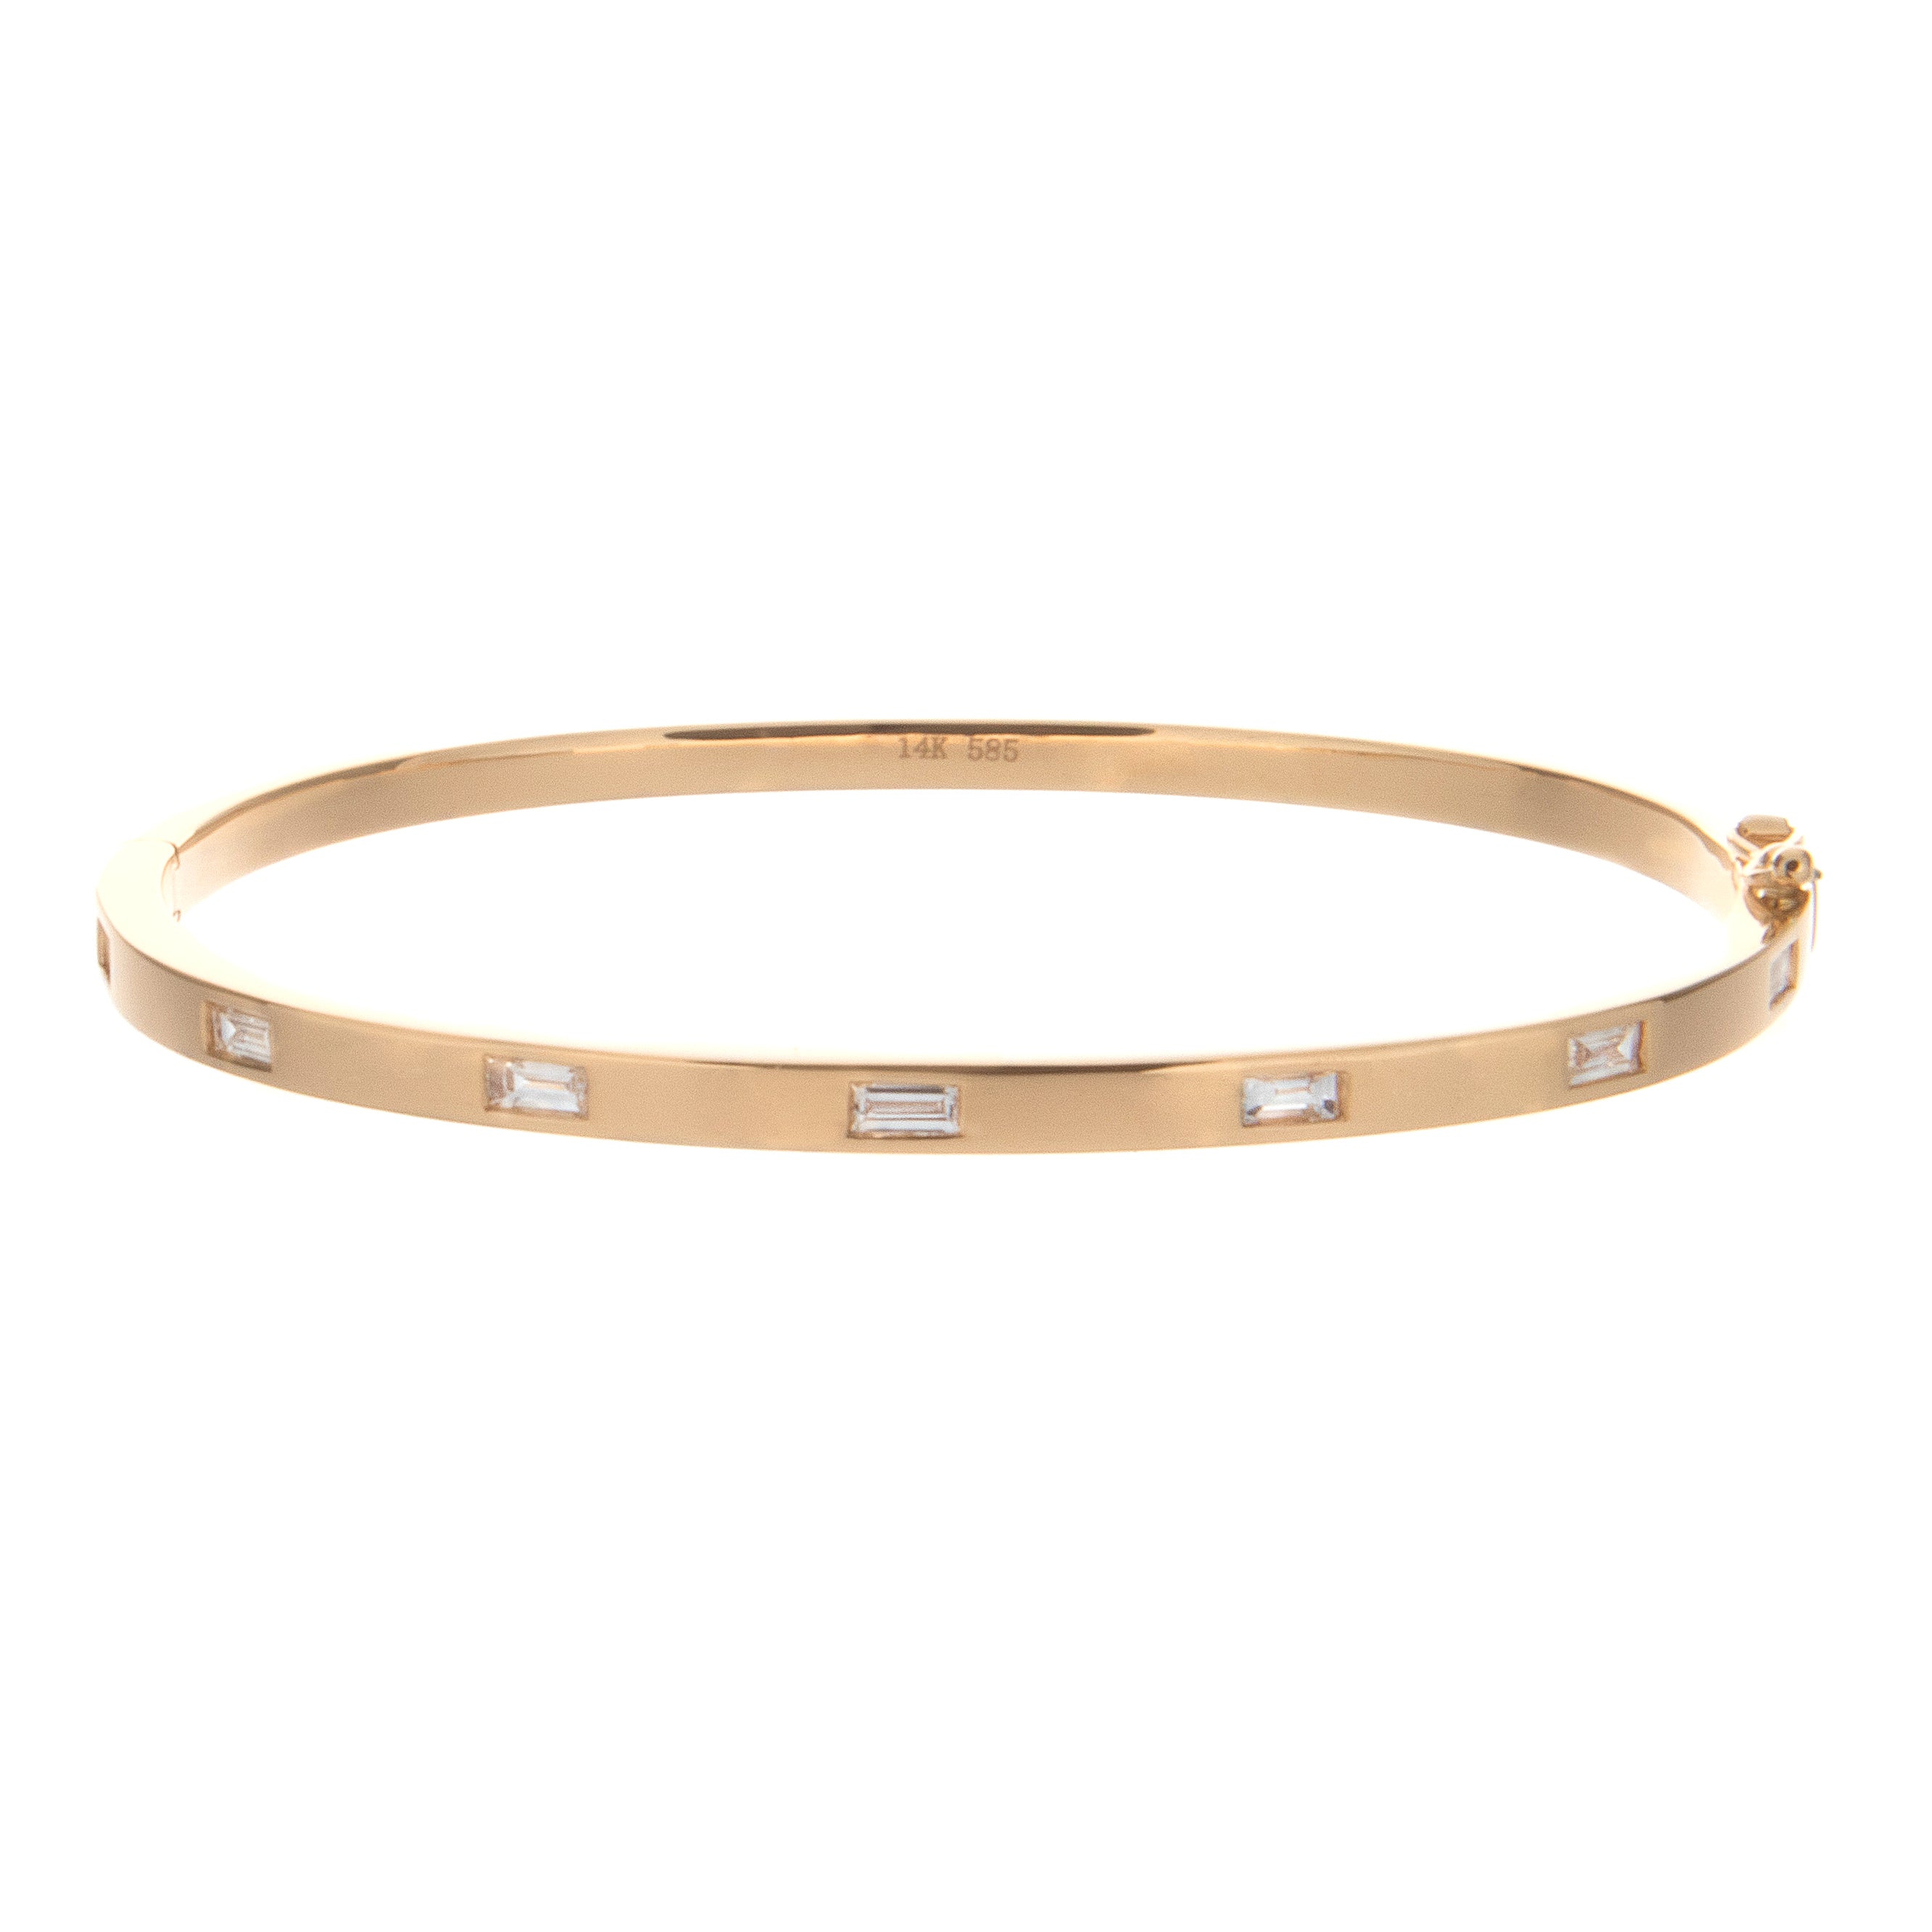 Gold Bangle (Classic) - 14K Gold Plated Bangle Bracelet